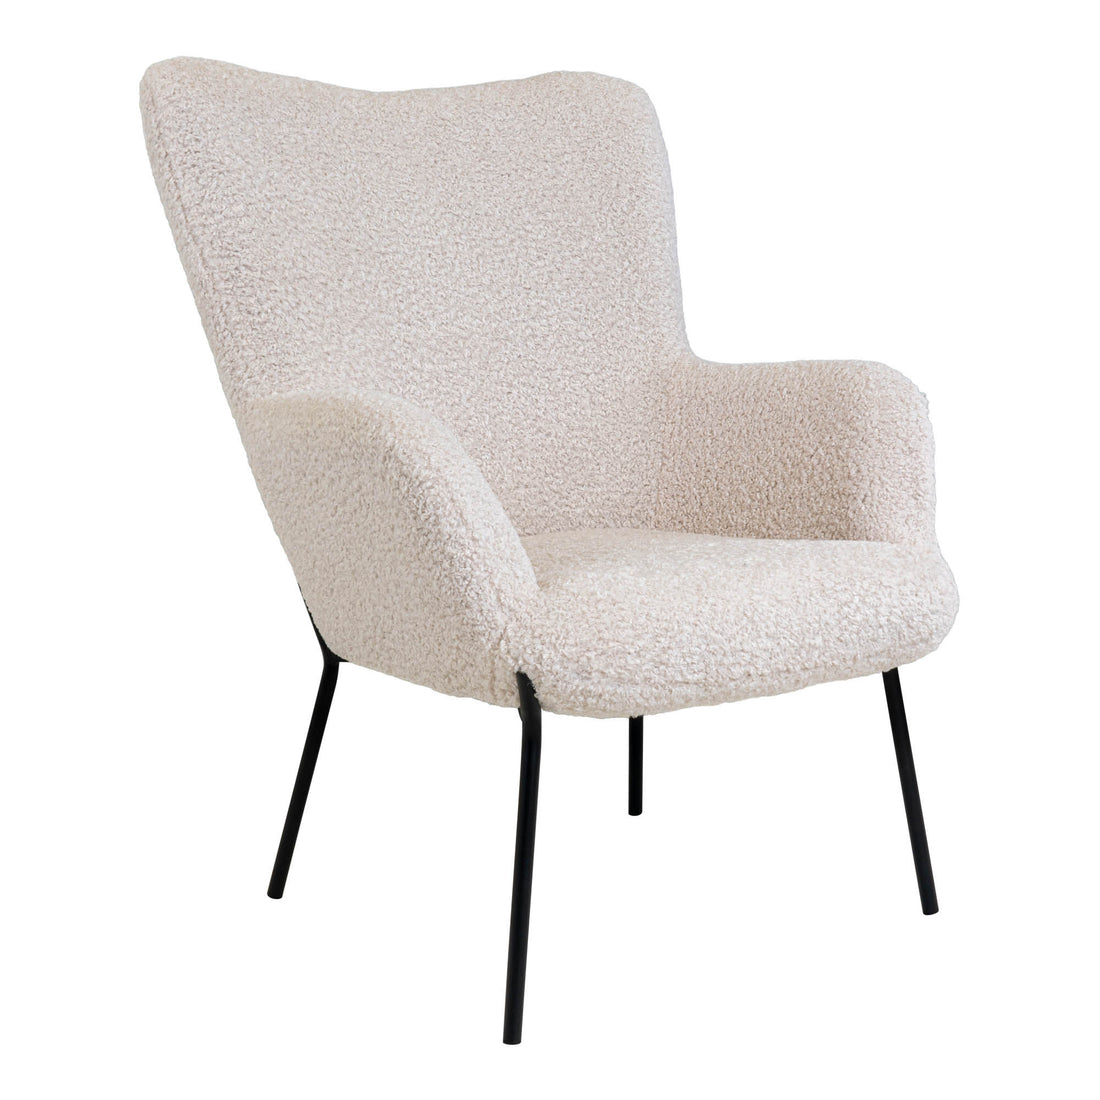 Glasgow chair - chair in white artificial lambskin with black legs - 1 - pcs